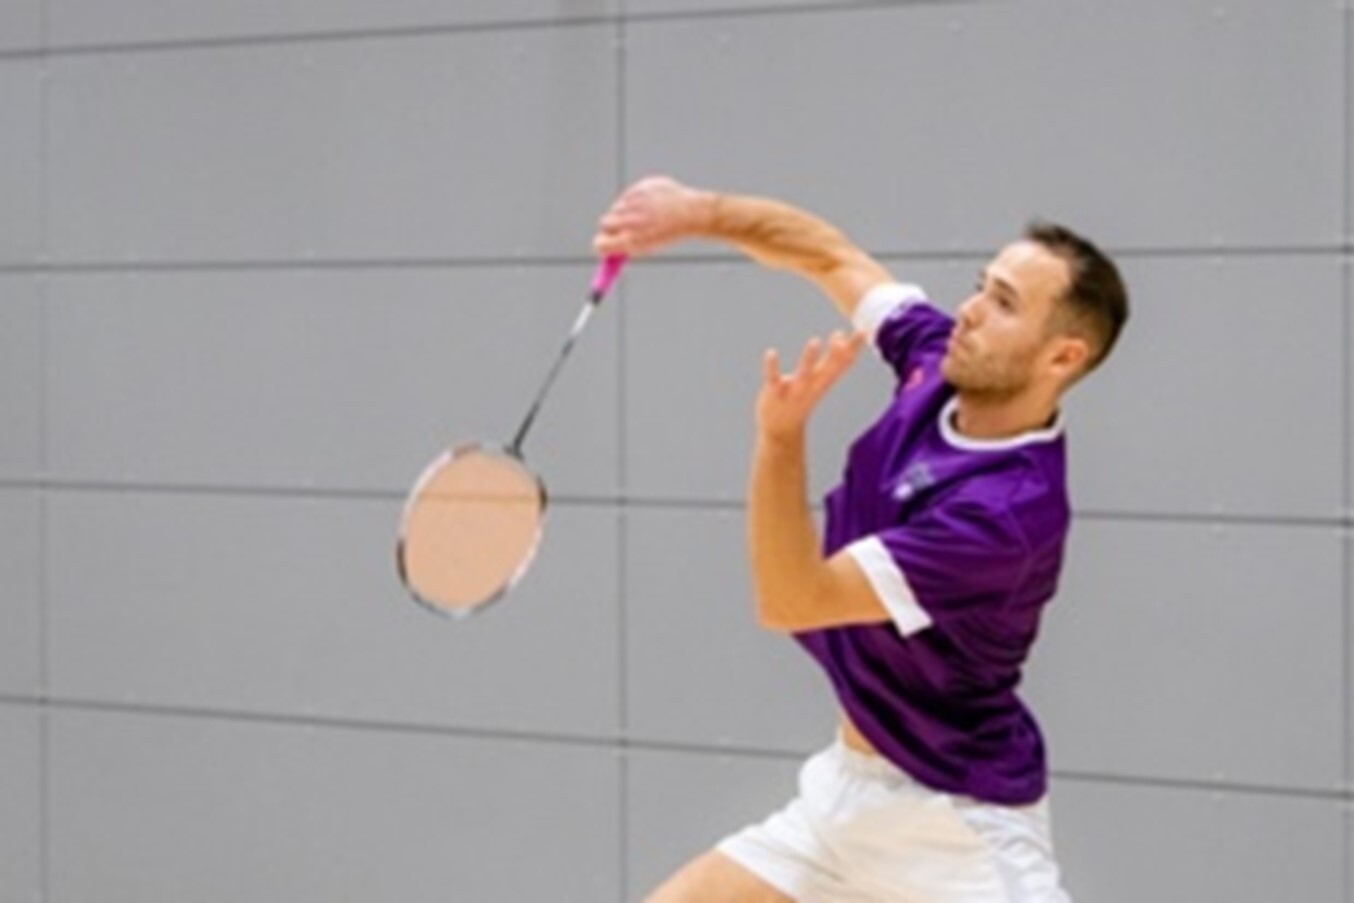 Male badminton player